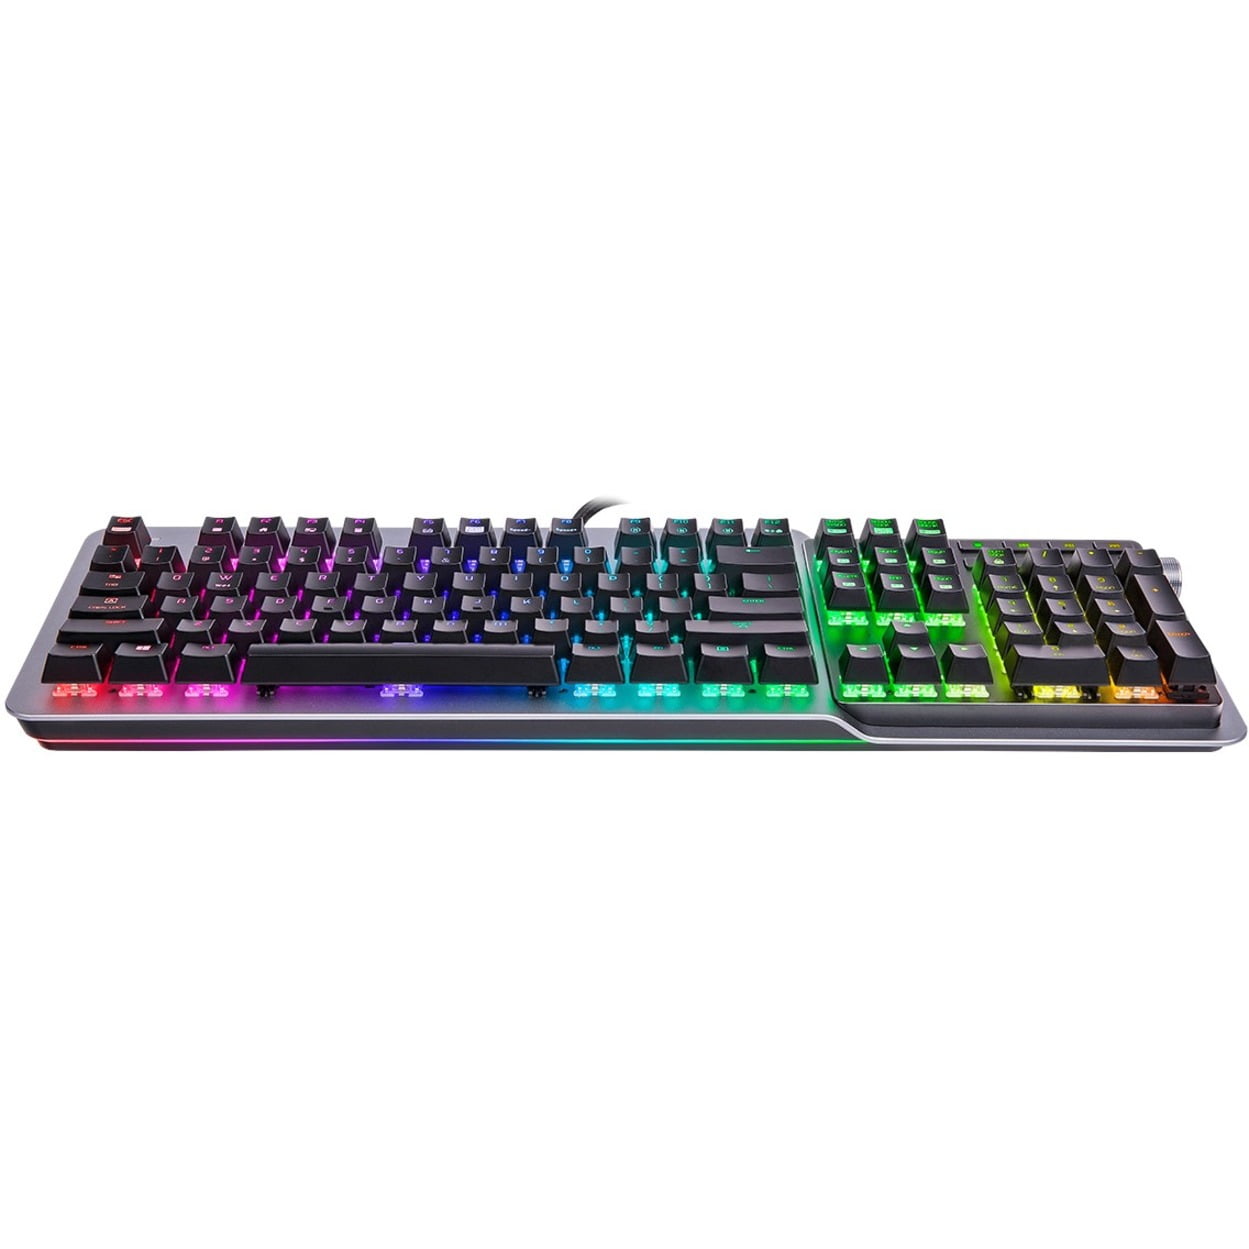 Thermaltake ARGENT K5 RGB Gaming Keyboard Cherry MX Blue, 104 Keys 